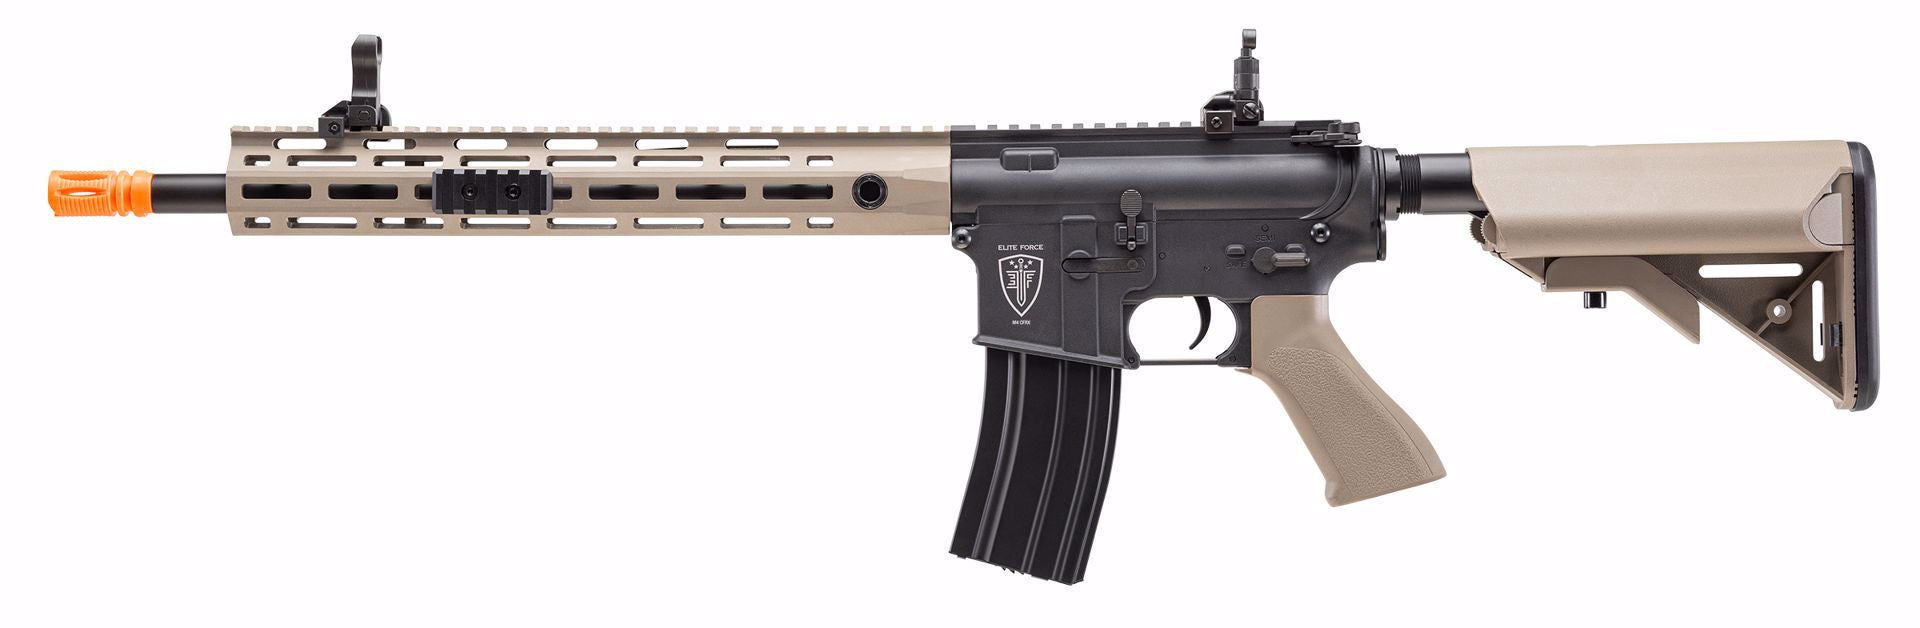 ELITE FORCE USA, UMAREX USA Elite Force M4 CFRX Black and Tan EyeTrace AEG Airsoft Rifle Gun